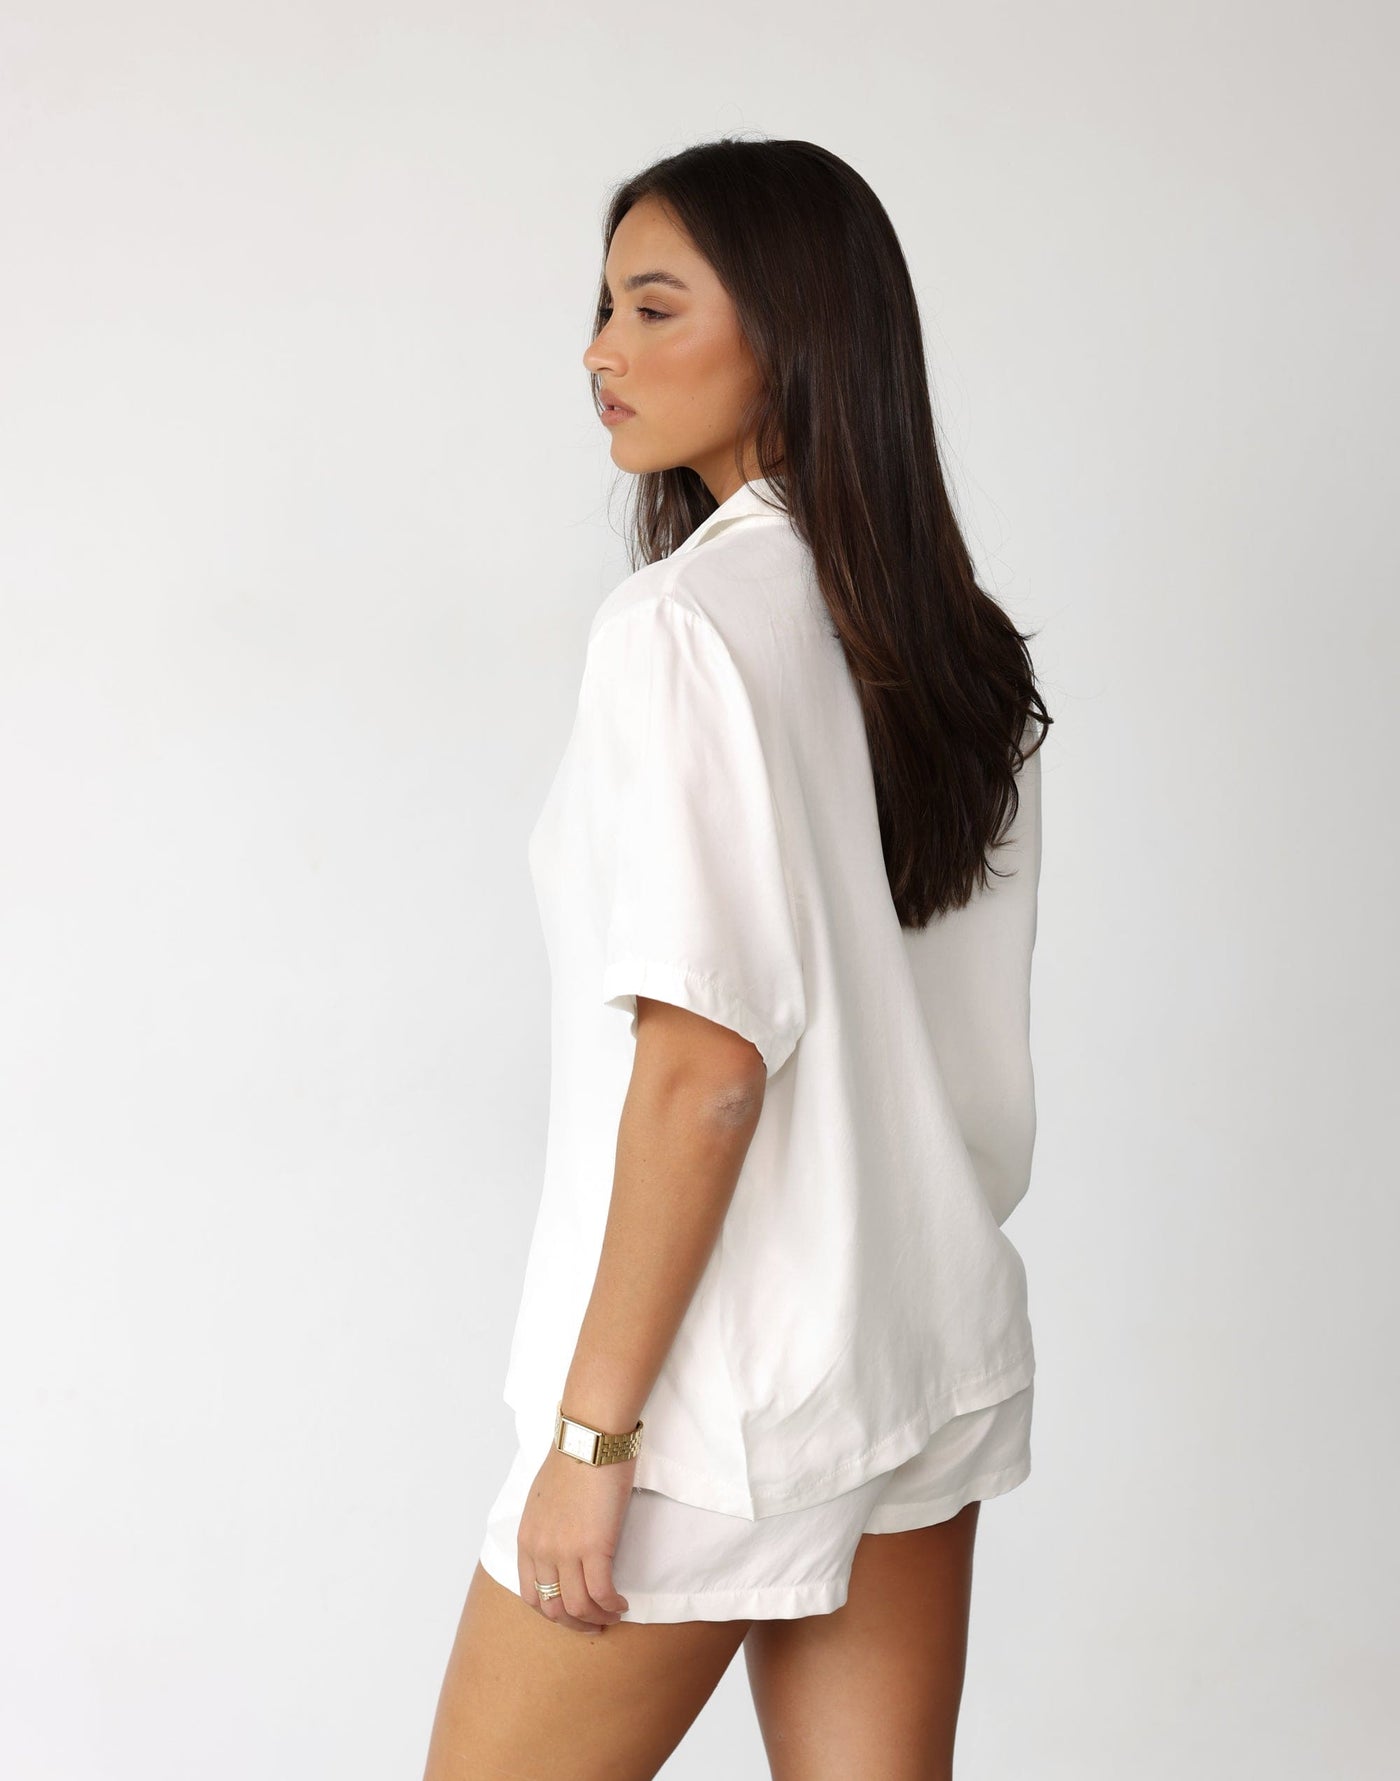 Minni Shirt (White) - Cupro Button Closure Relaxed Shirt - Women's Top - Charcoal Clothing